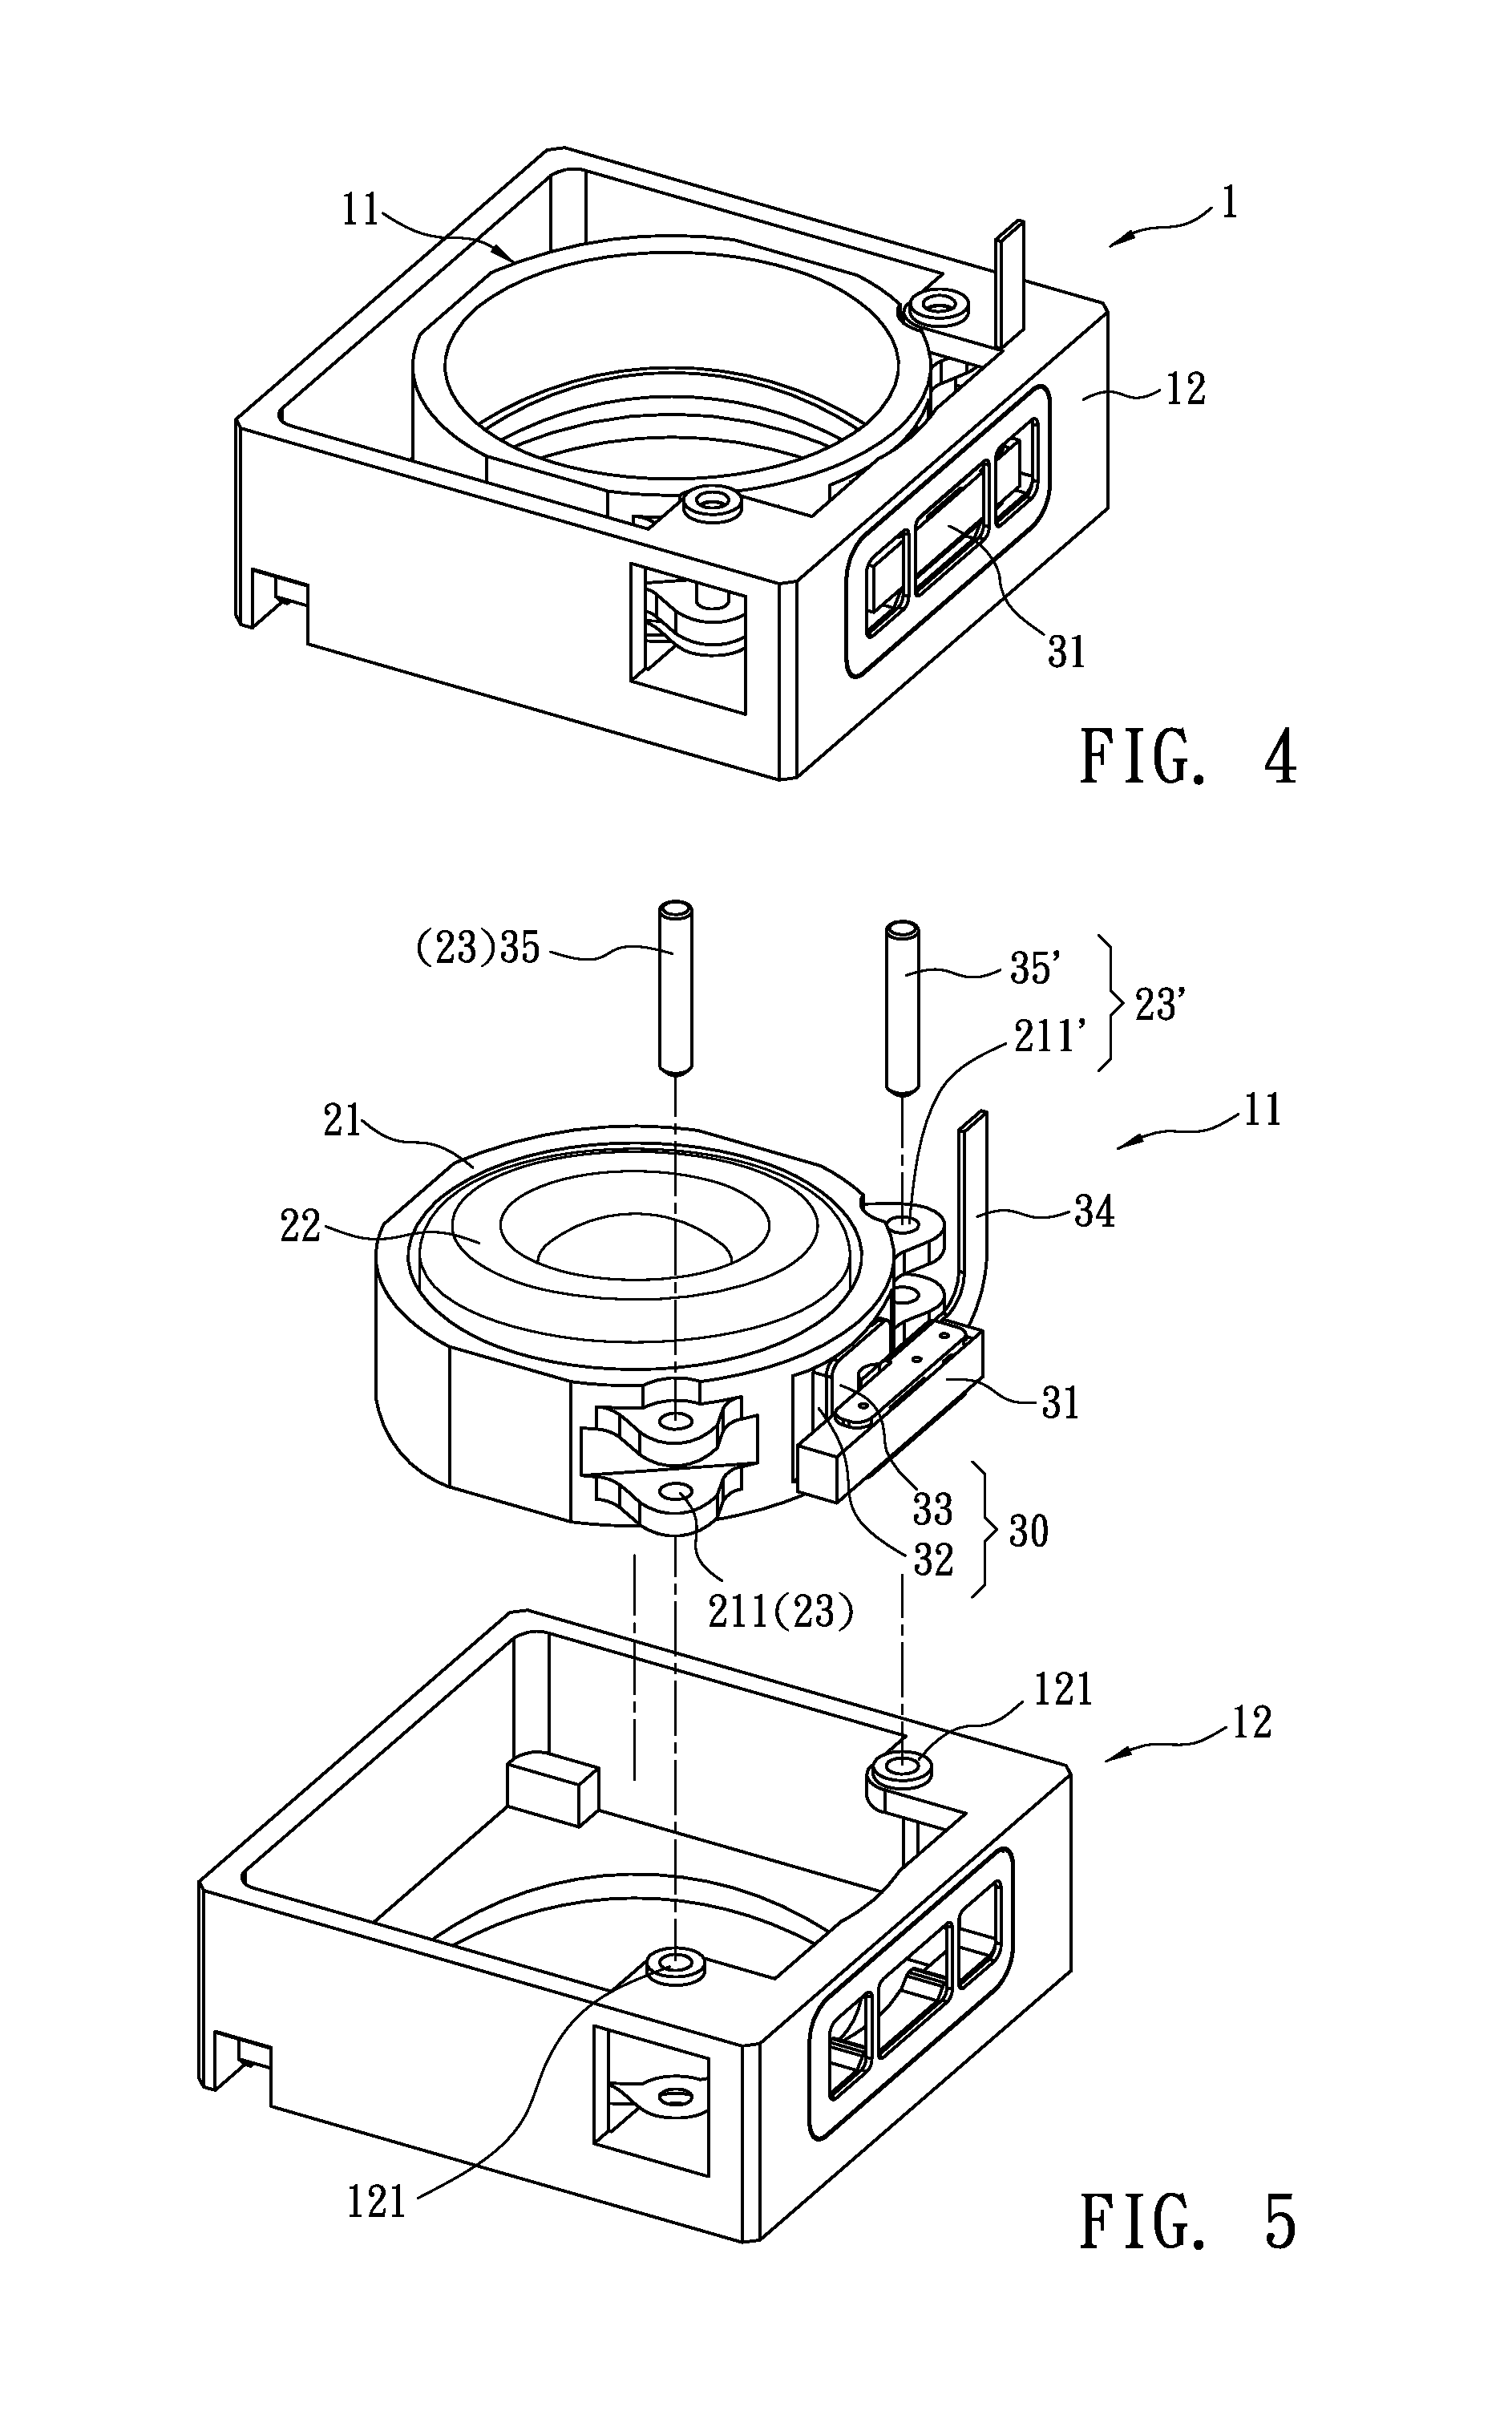 Compact auto focus lens module with piezoelectric actuator